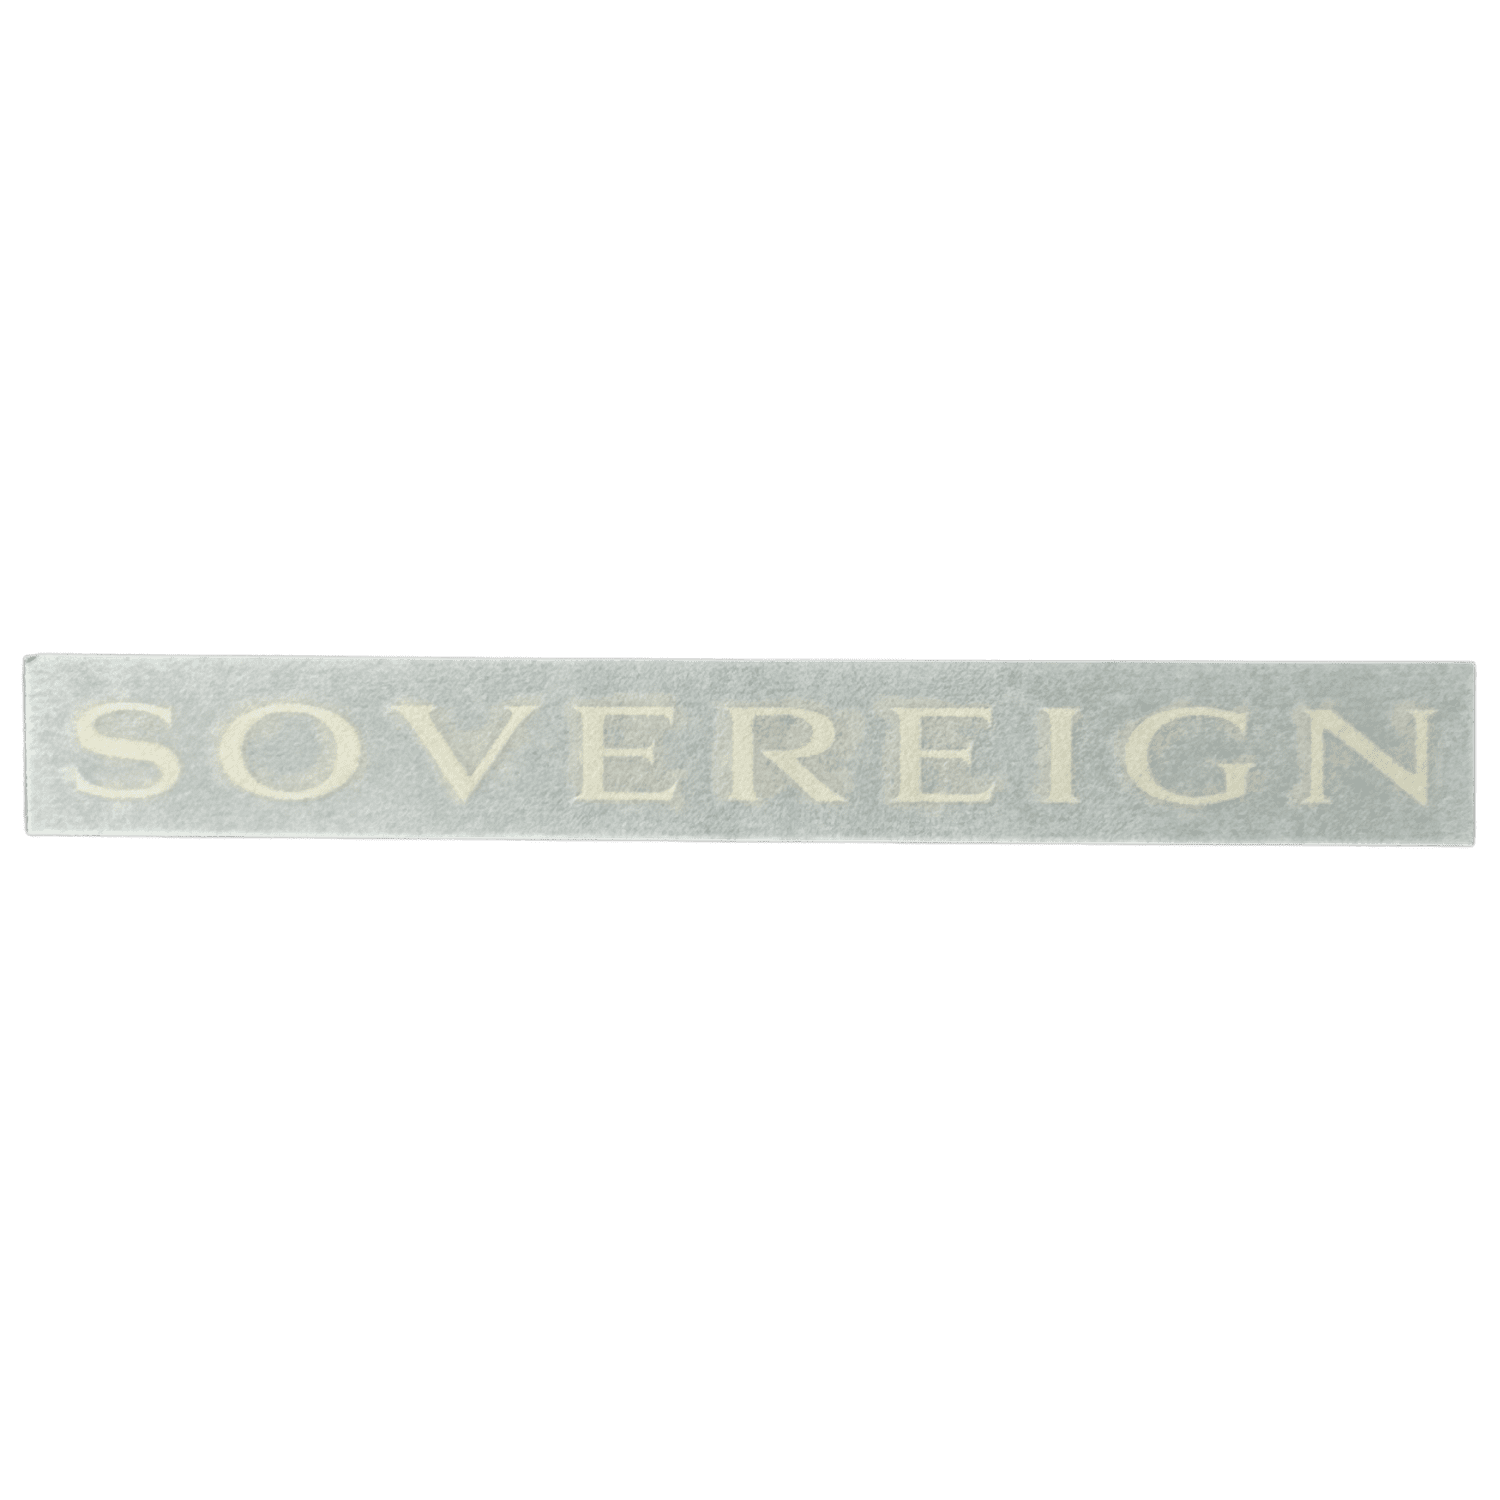 sovereign vinyl sticker white